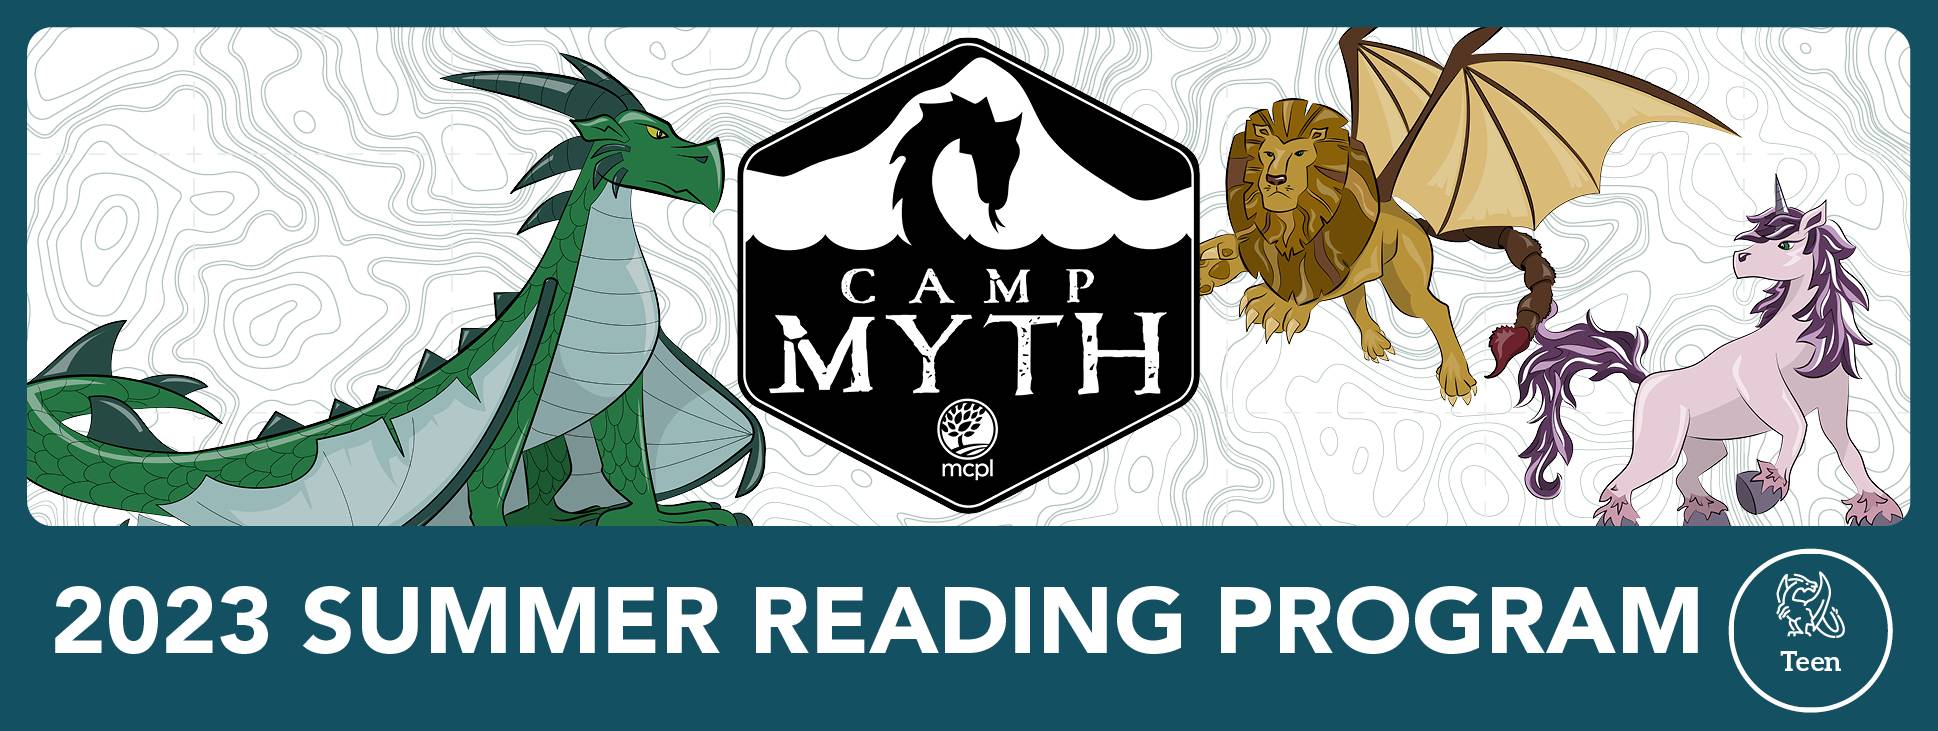 Camp Myth: 2023 Summer Reading Program